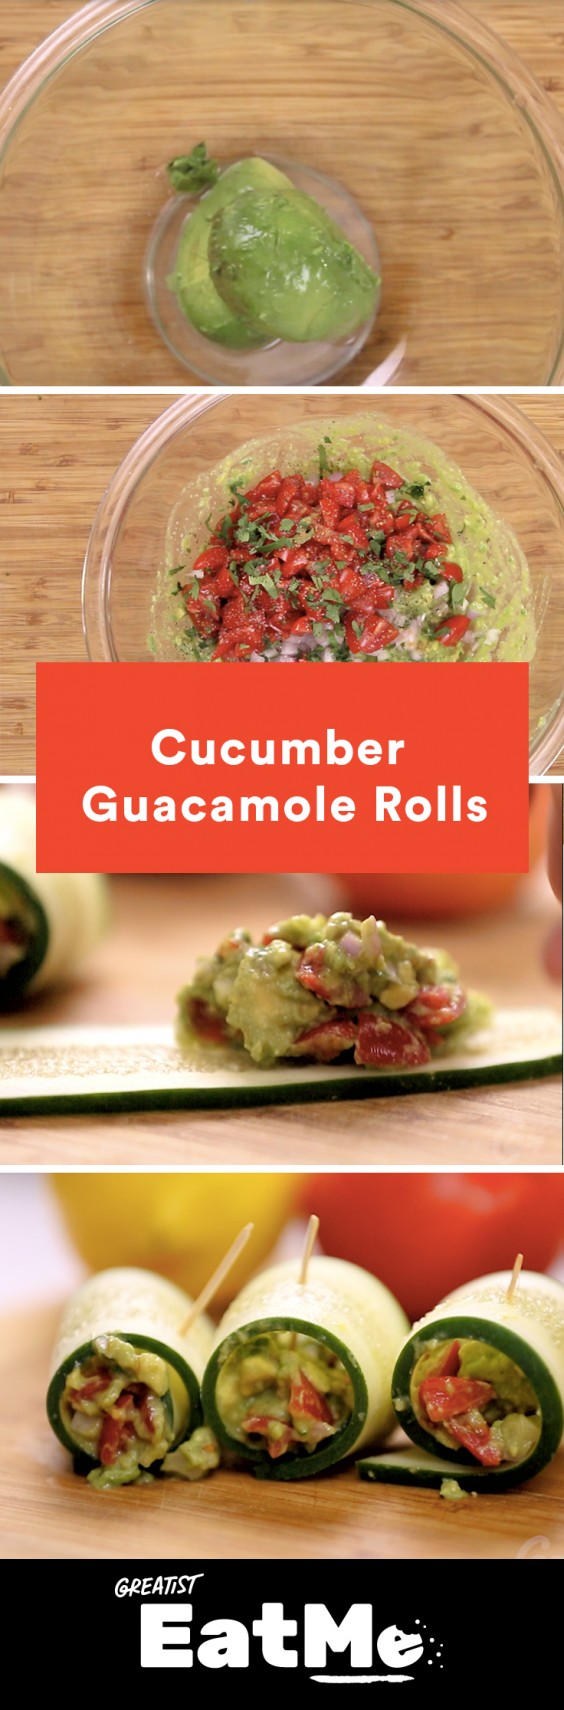 Eat Me Video: Cucumber Guac Rolls